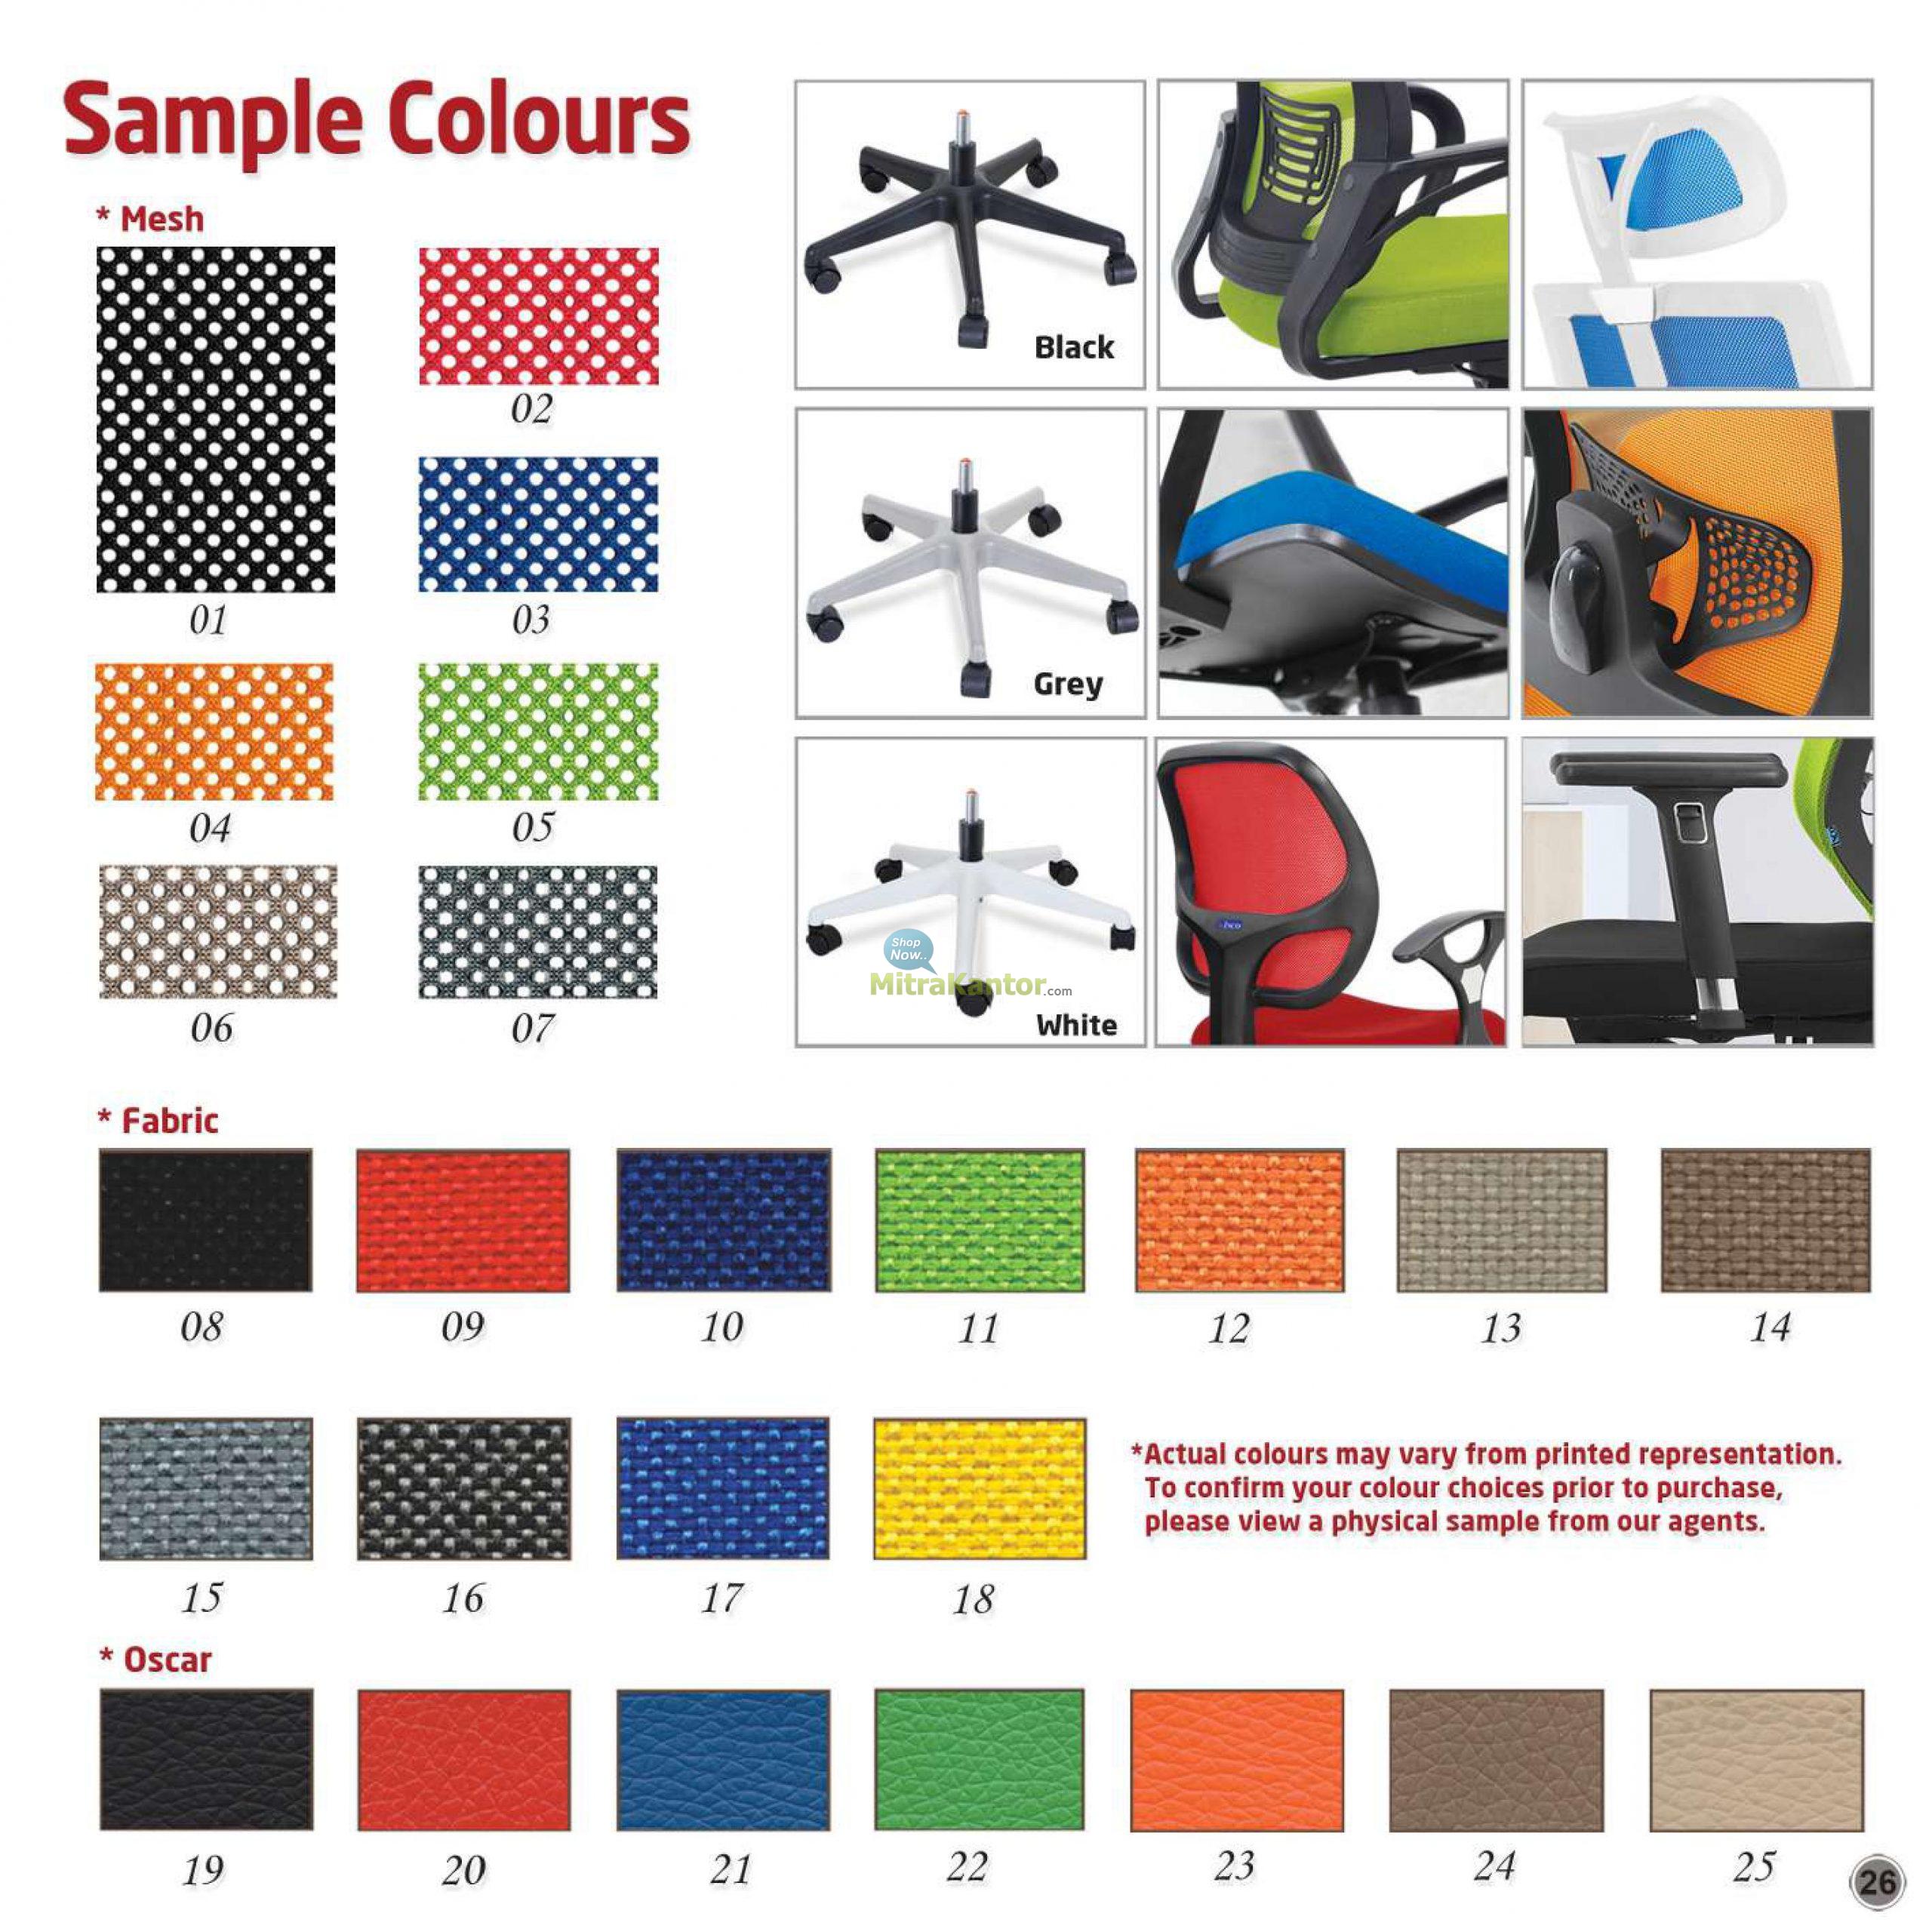 inco-sample-colours